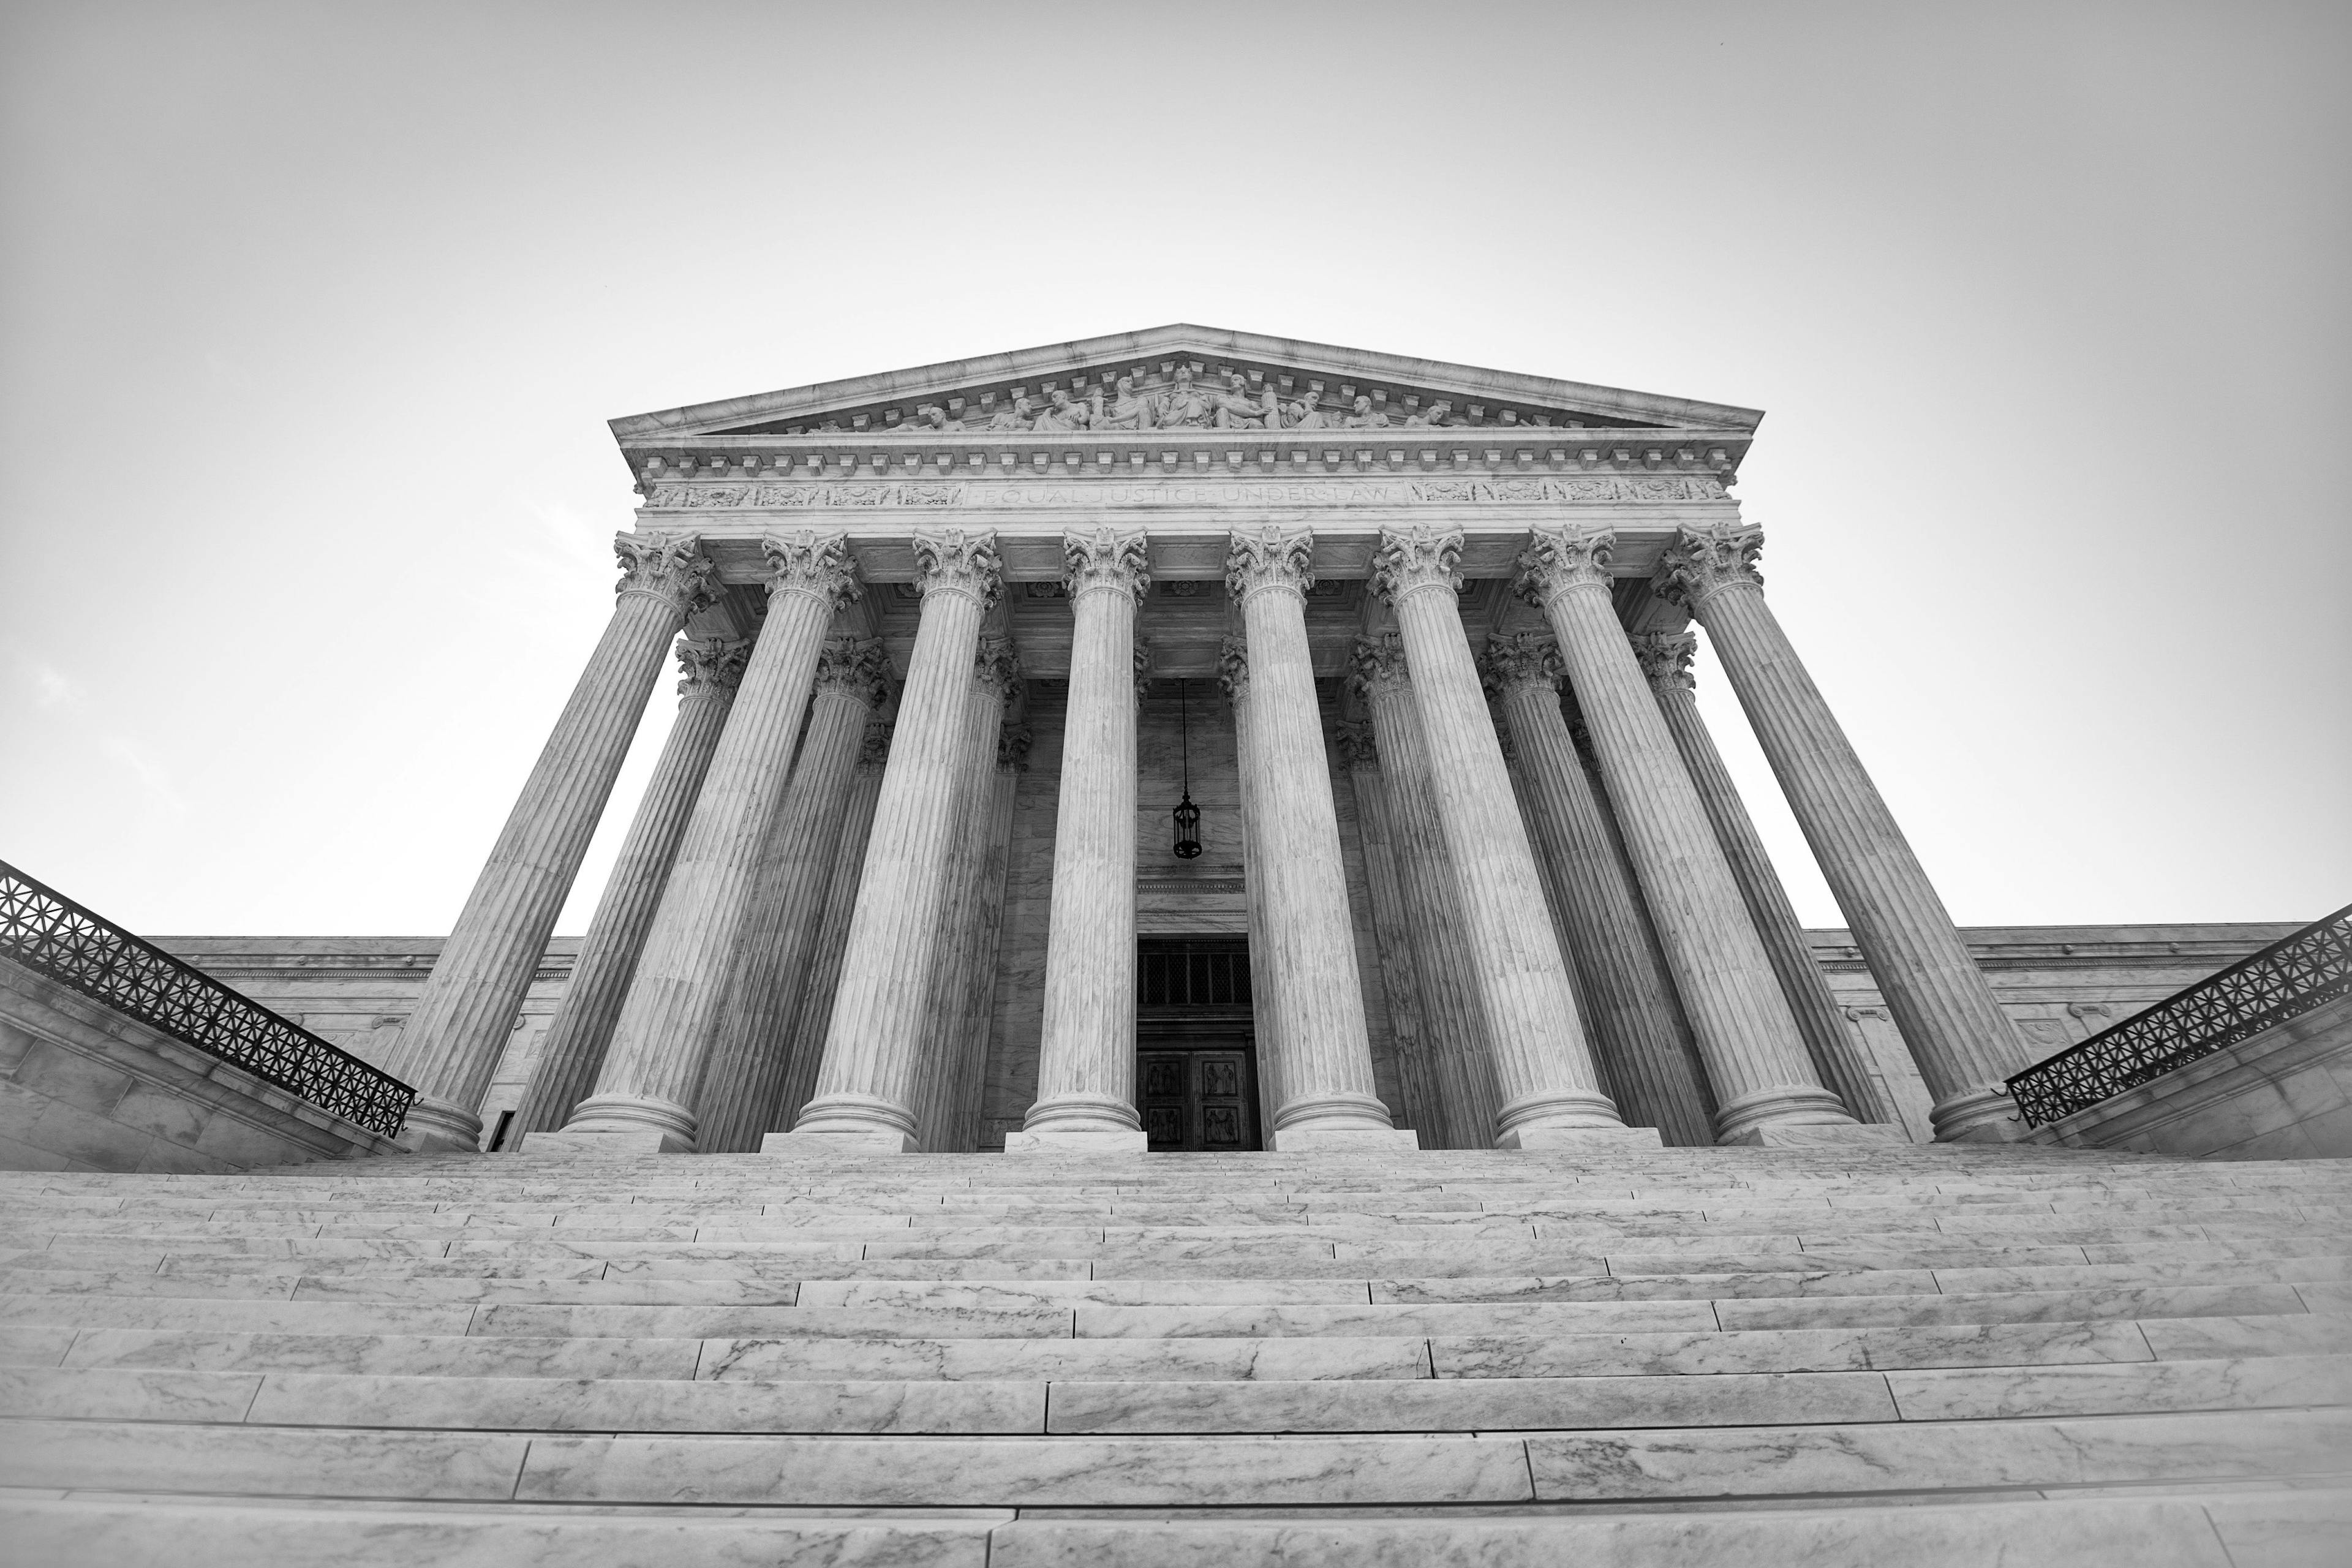 Supreme Court steps | Image credit: renaschild - stock.adobe.com